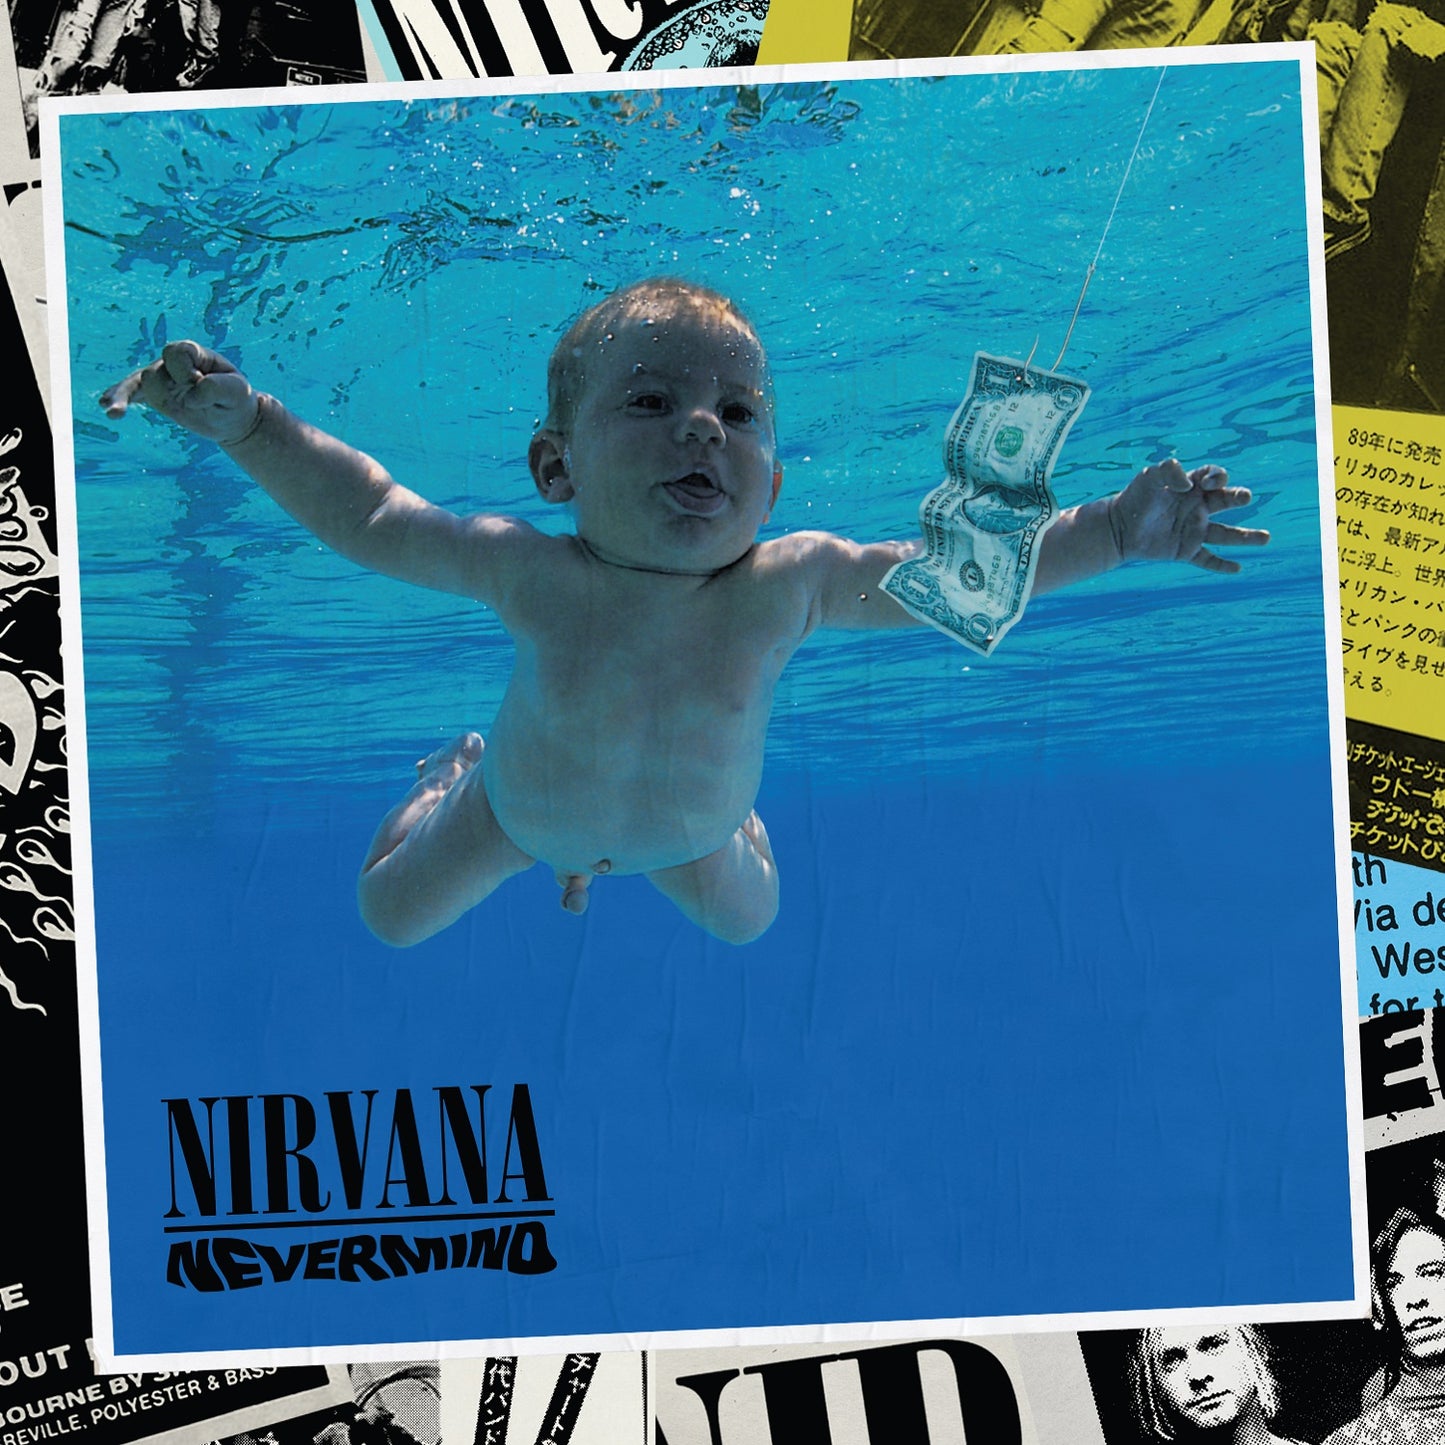 Nirvana - Nevermind: 30th Anniversary - CD Boxed Set